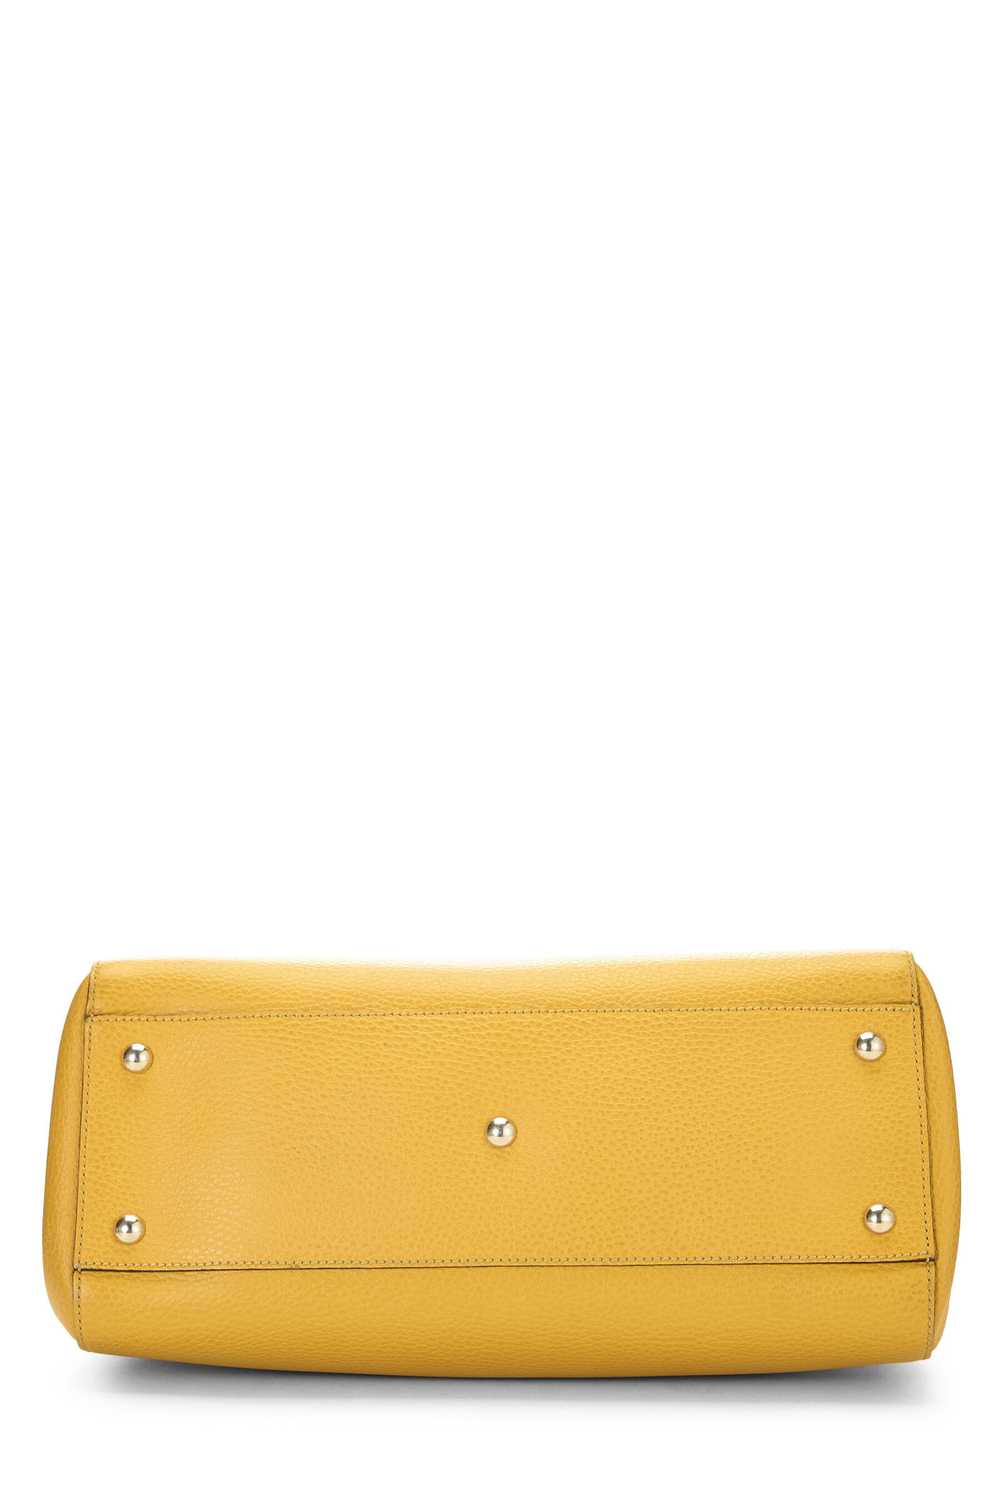 Yellow Leather Convertible Swing Top Handle Bag - image 5